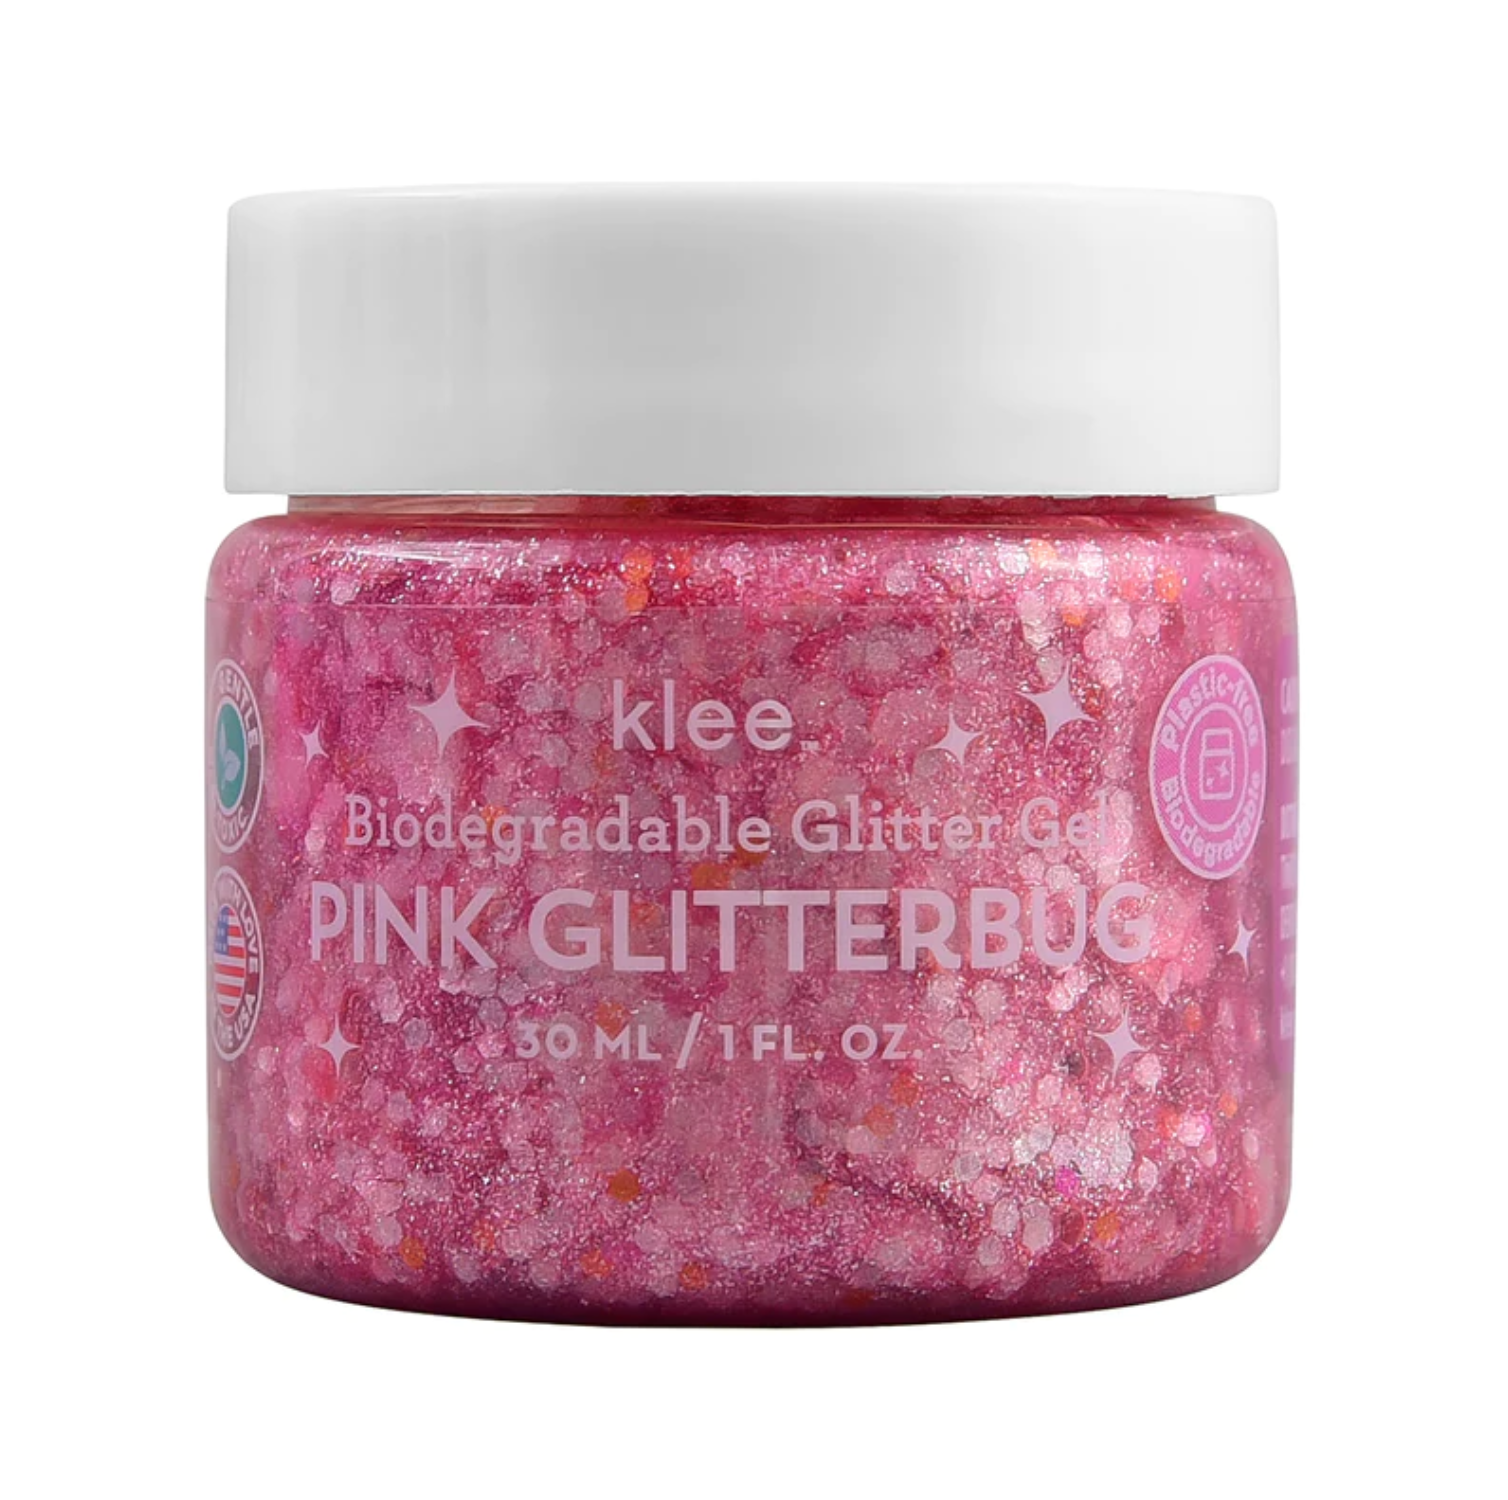 Pink Glitterbug Biodegradable Glitter Gel – Natural Okie Baby